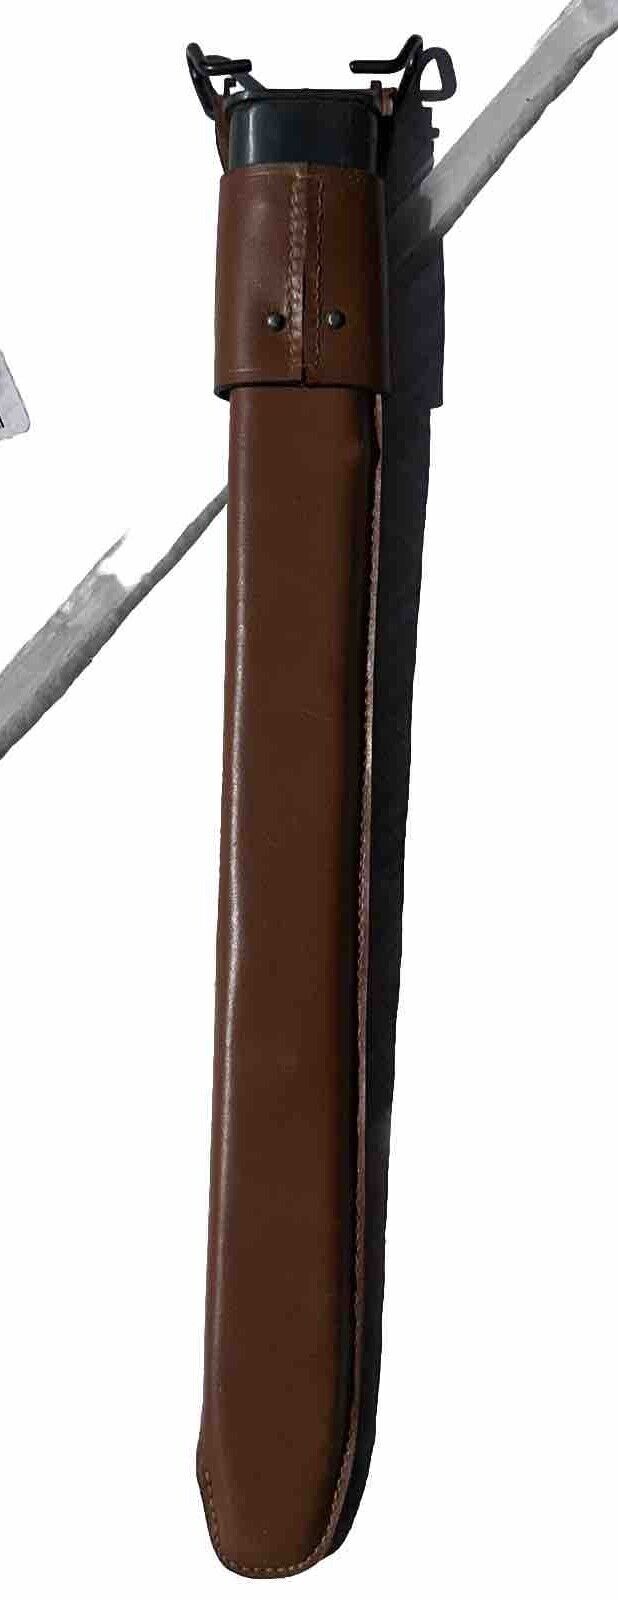 M1905 Springfield Bayonet Scabbard conversion to M1910 style Scabbard